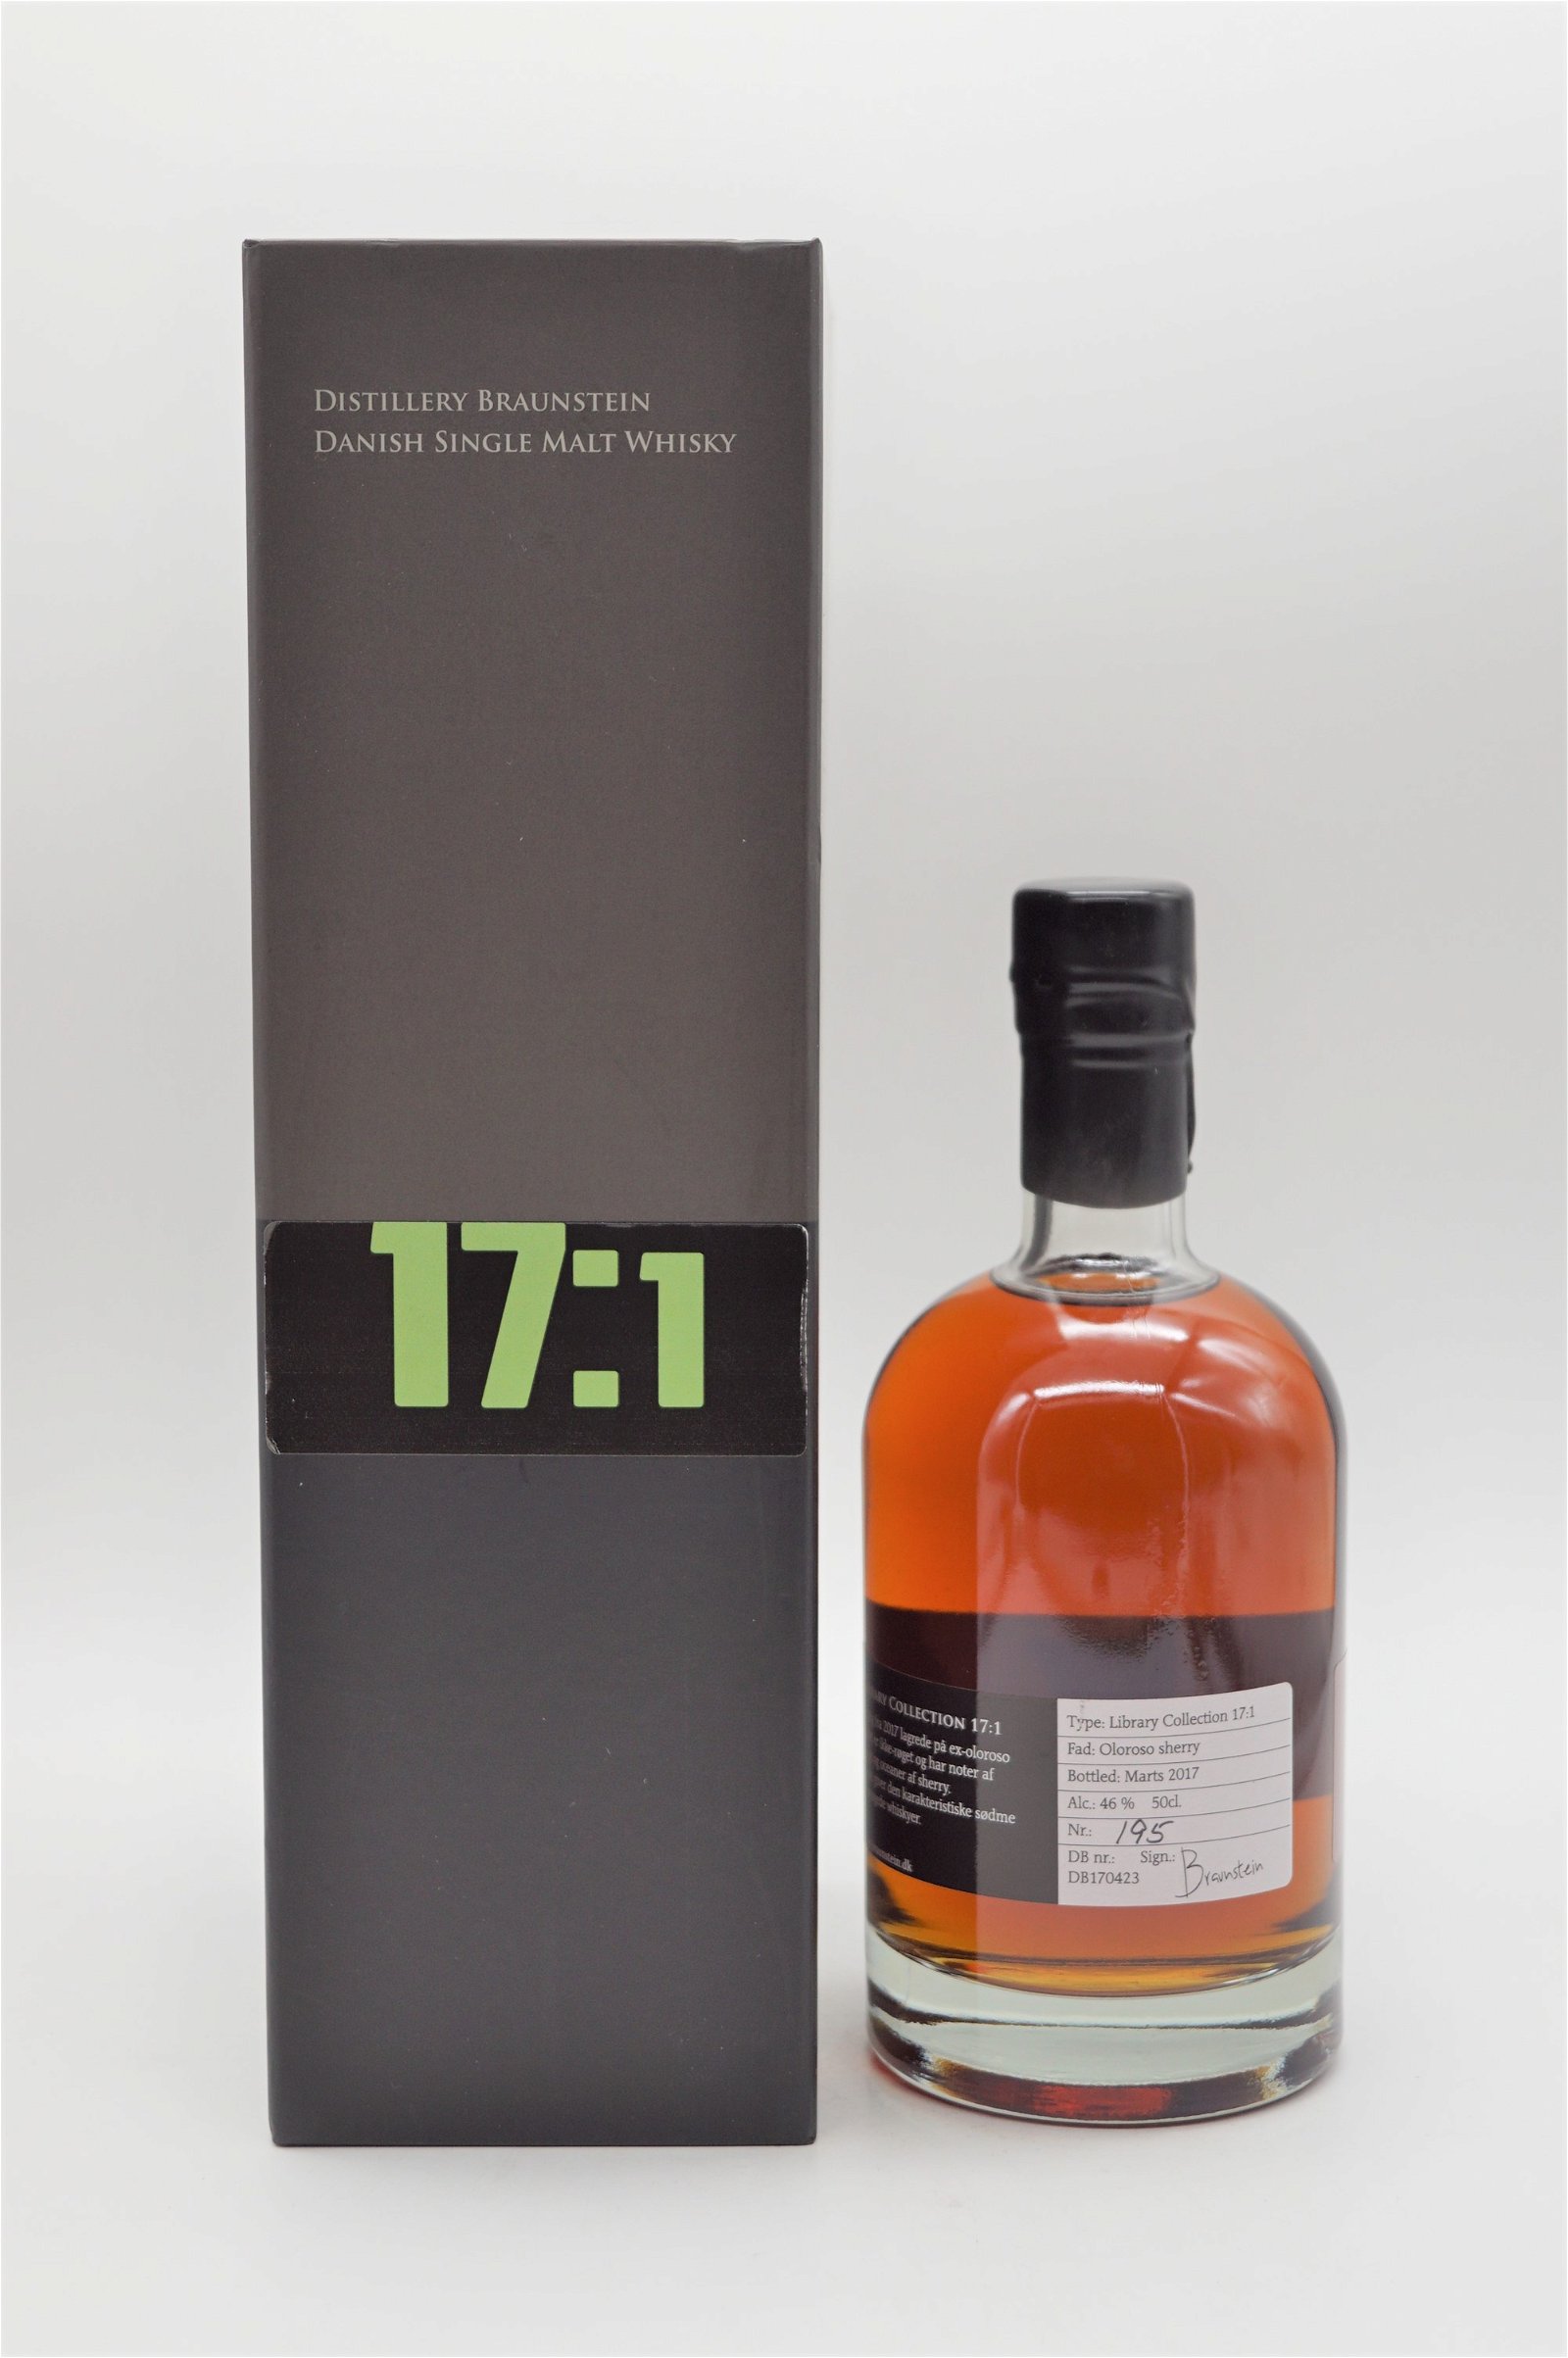 Braunstein Libary Collection 17:1 Dansk Single Malt Whisky